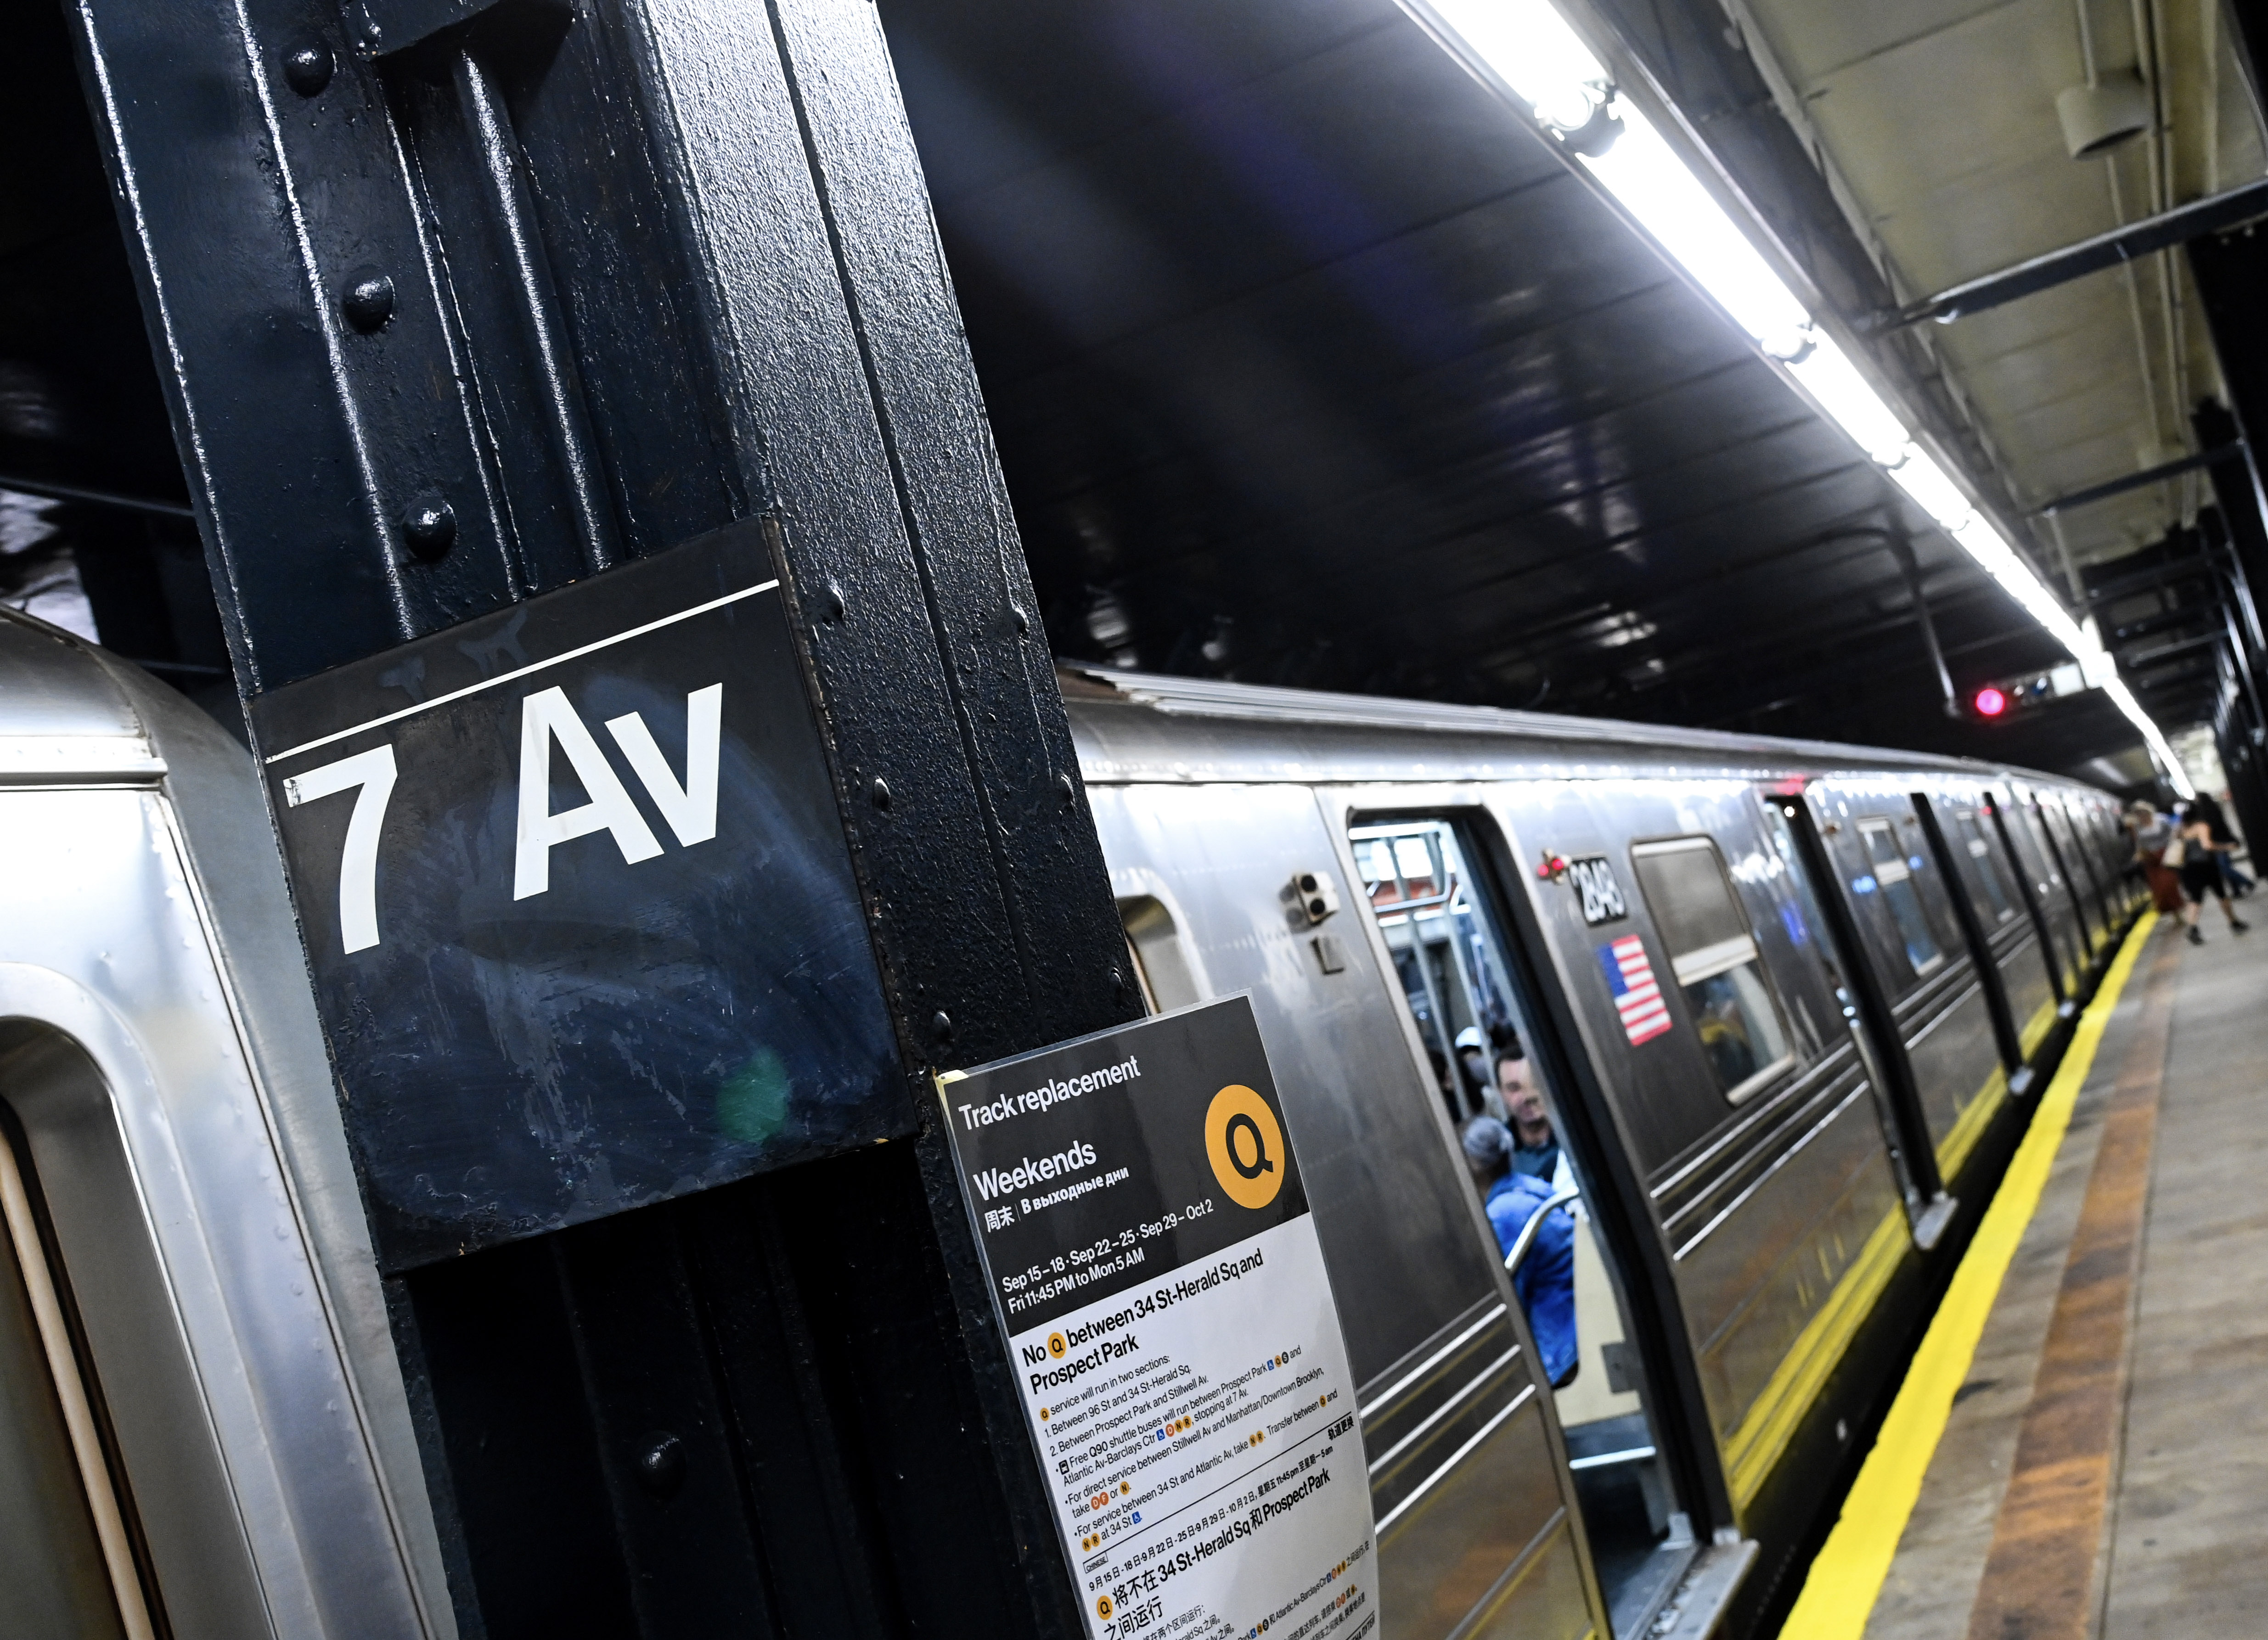 MTA Completes Re-New-Vation Project at 7 Av B Q Station